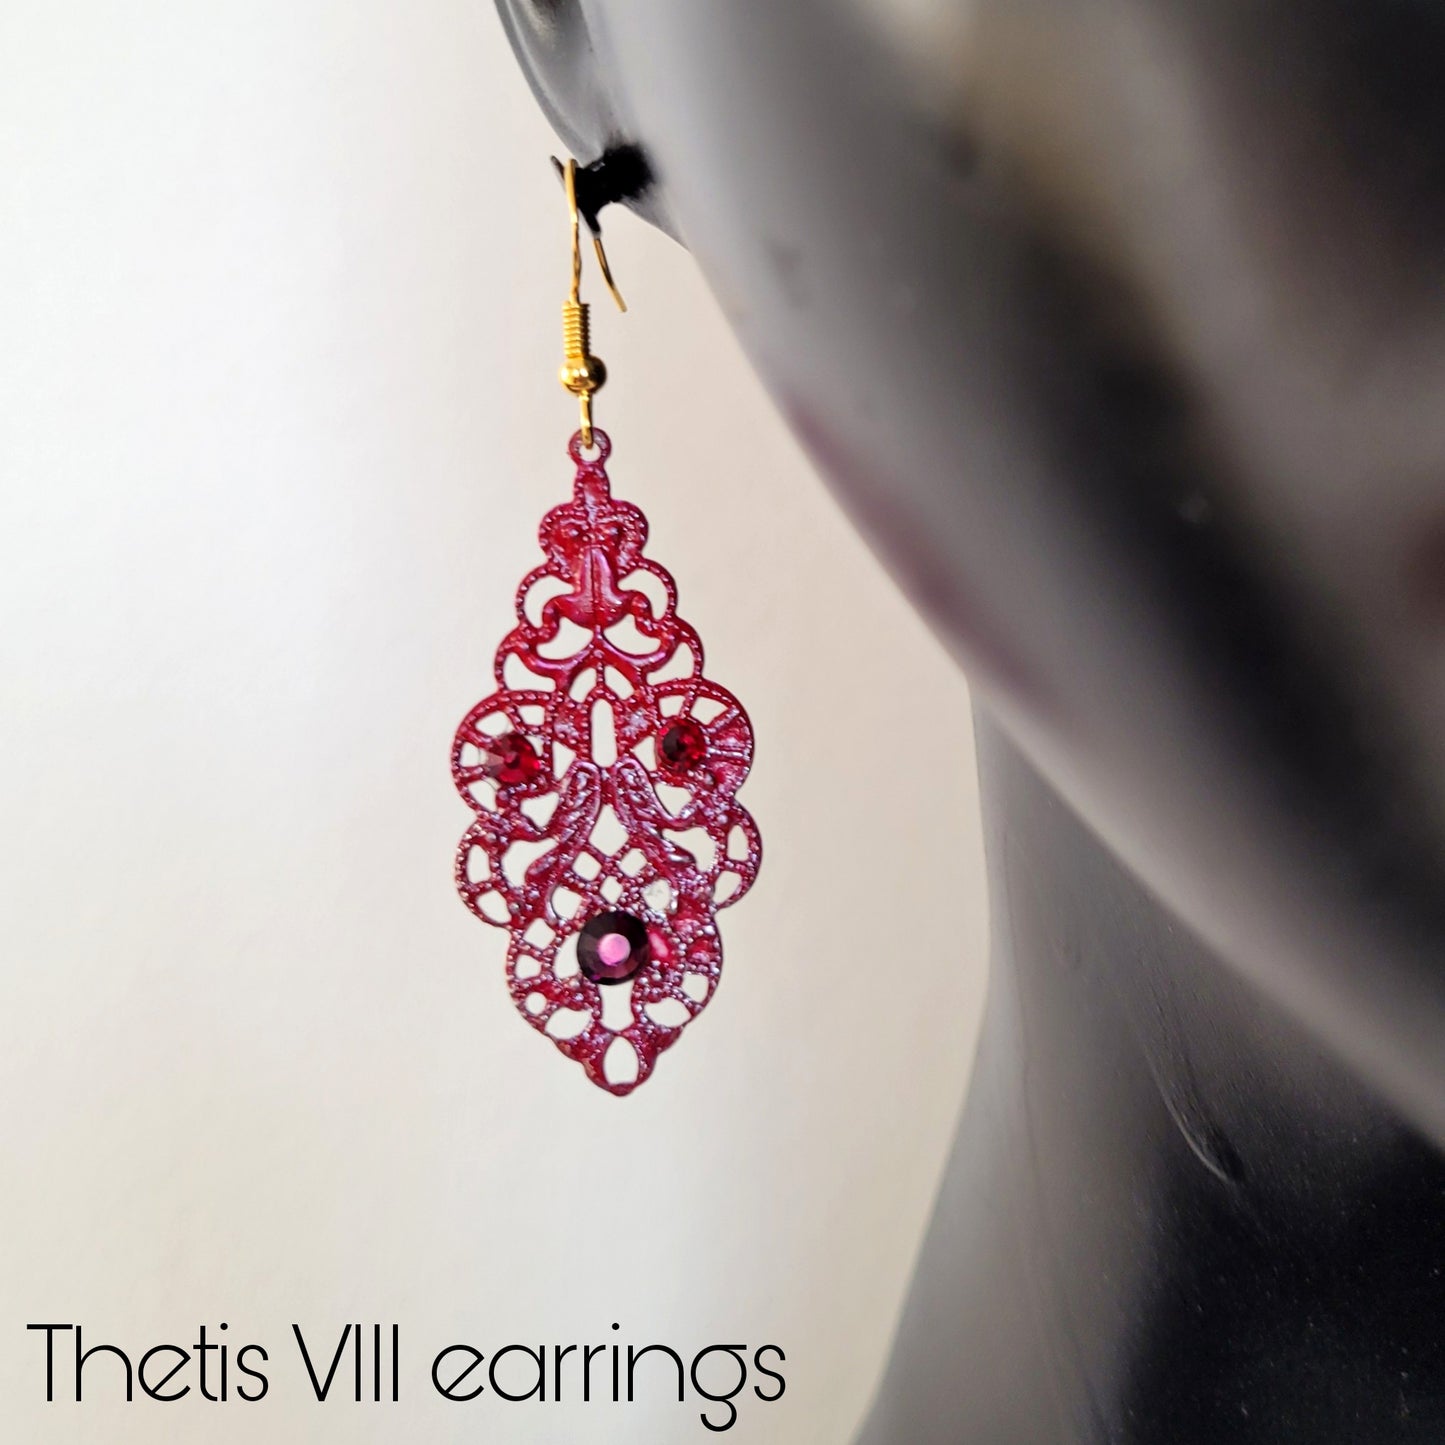 Deusa ex Machina collection: The Thetis earrings